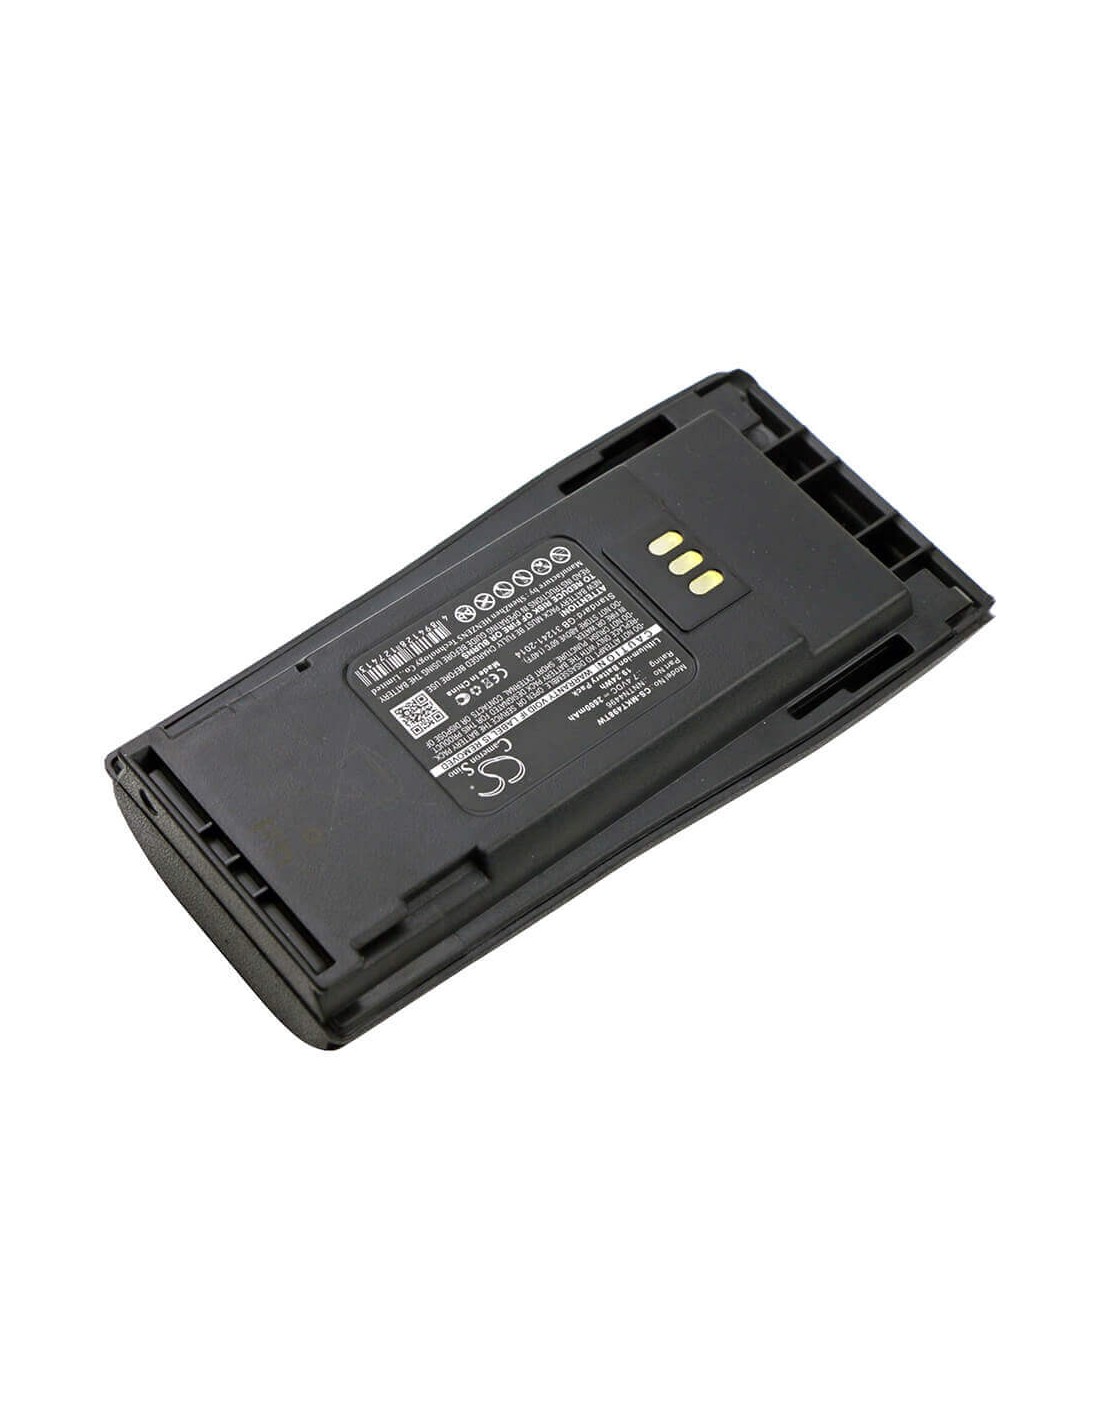 Li-ion Battery for Motorola Cp150, Cp200, Cp250 7.2V, 2600mAh - 18.72Wh